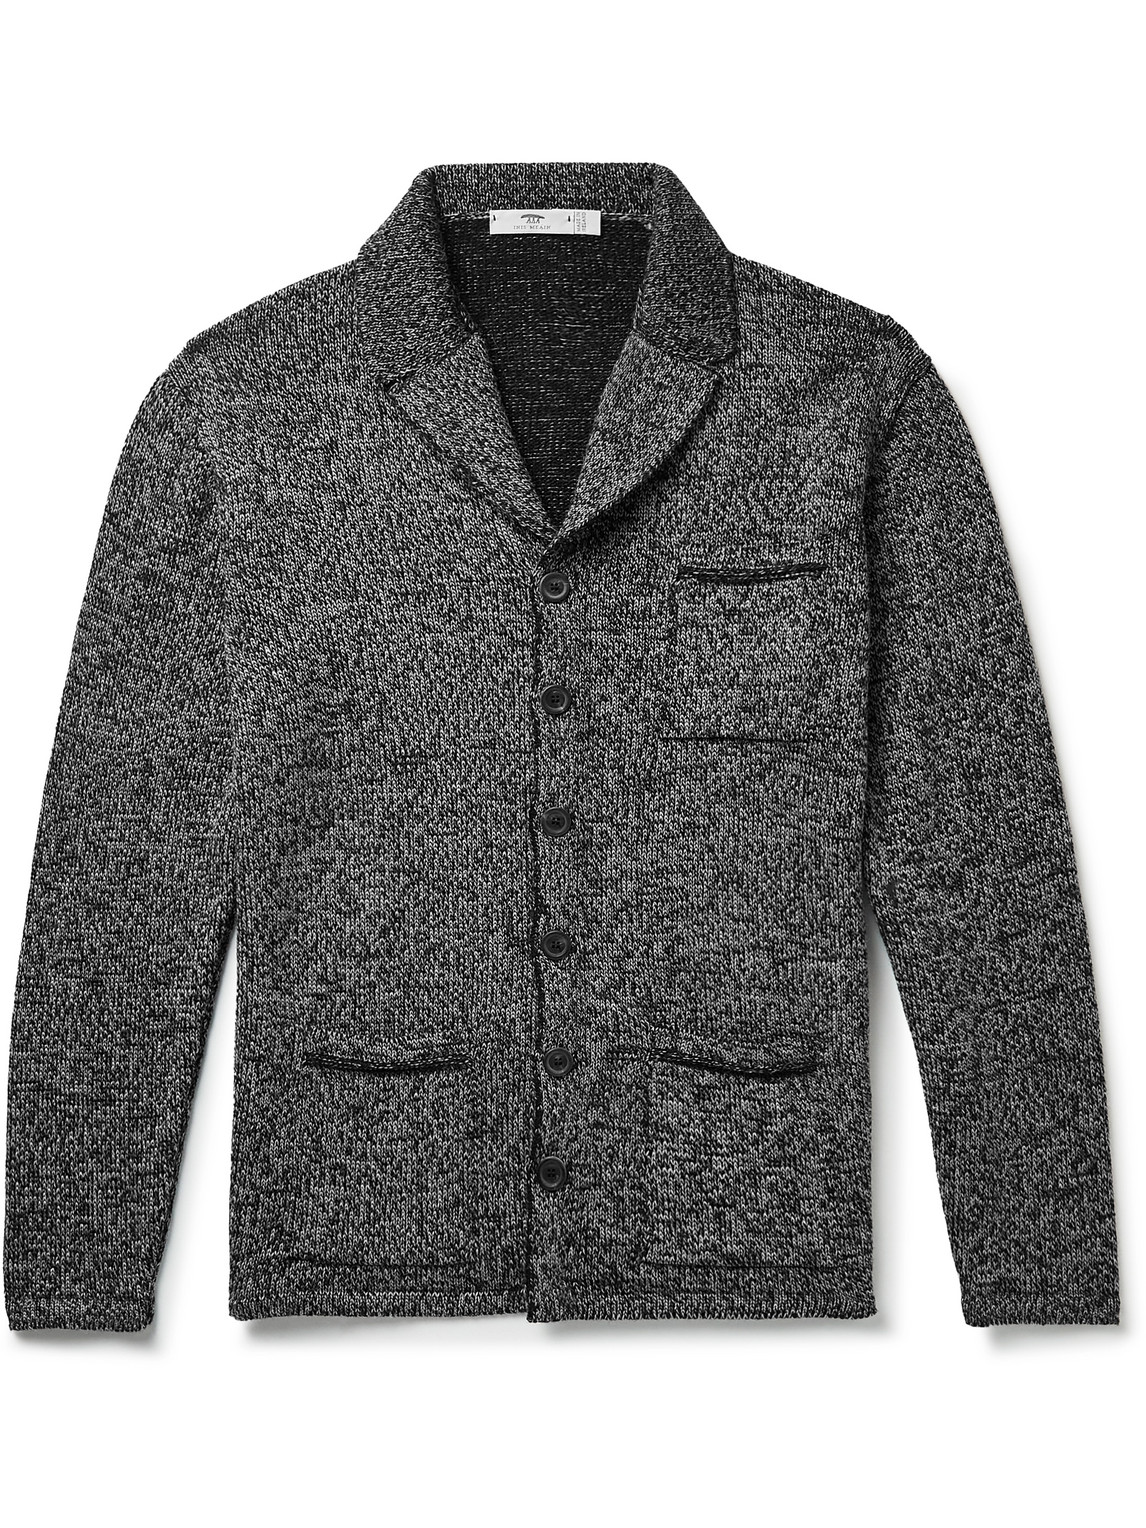 Inis Meain Pub Merino Wool, Alpaca And Silk-blend Jacket In Gray | ModeSens